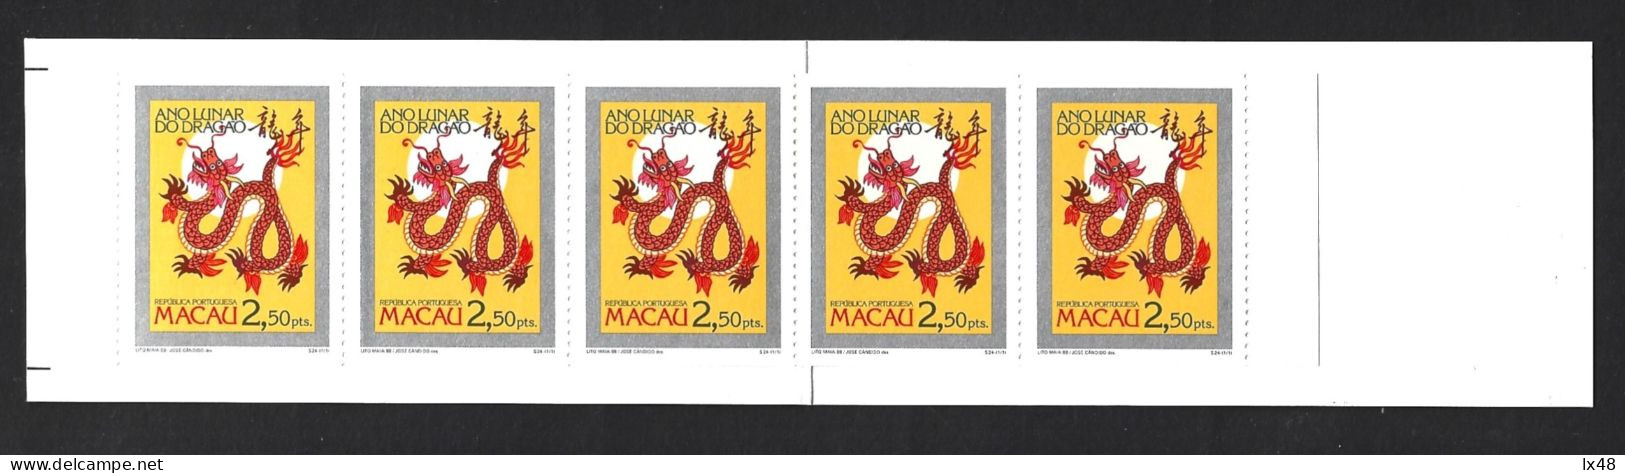 Dragon. Mythology. Astrology. Block Of 5 Stamps Of The Lunar Year Of The Dragon 1988, Macau. Drachen. Mythologie. Astro - Astrology